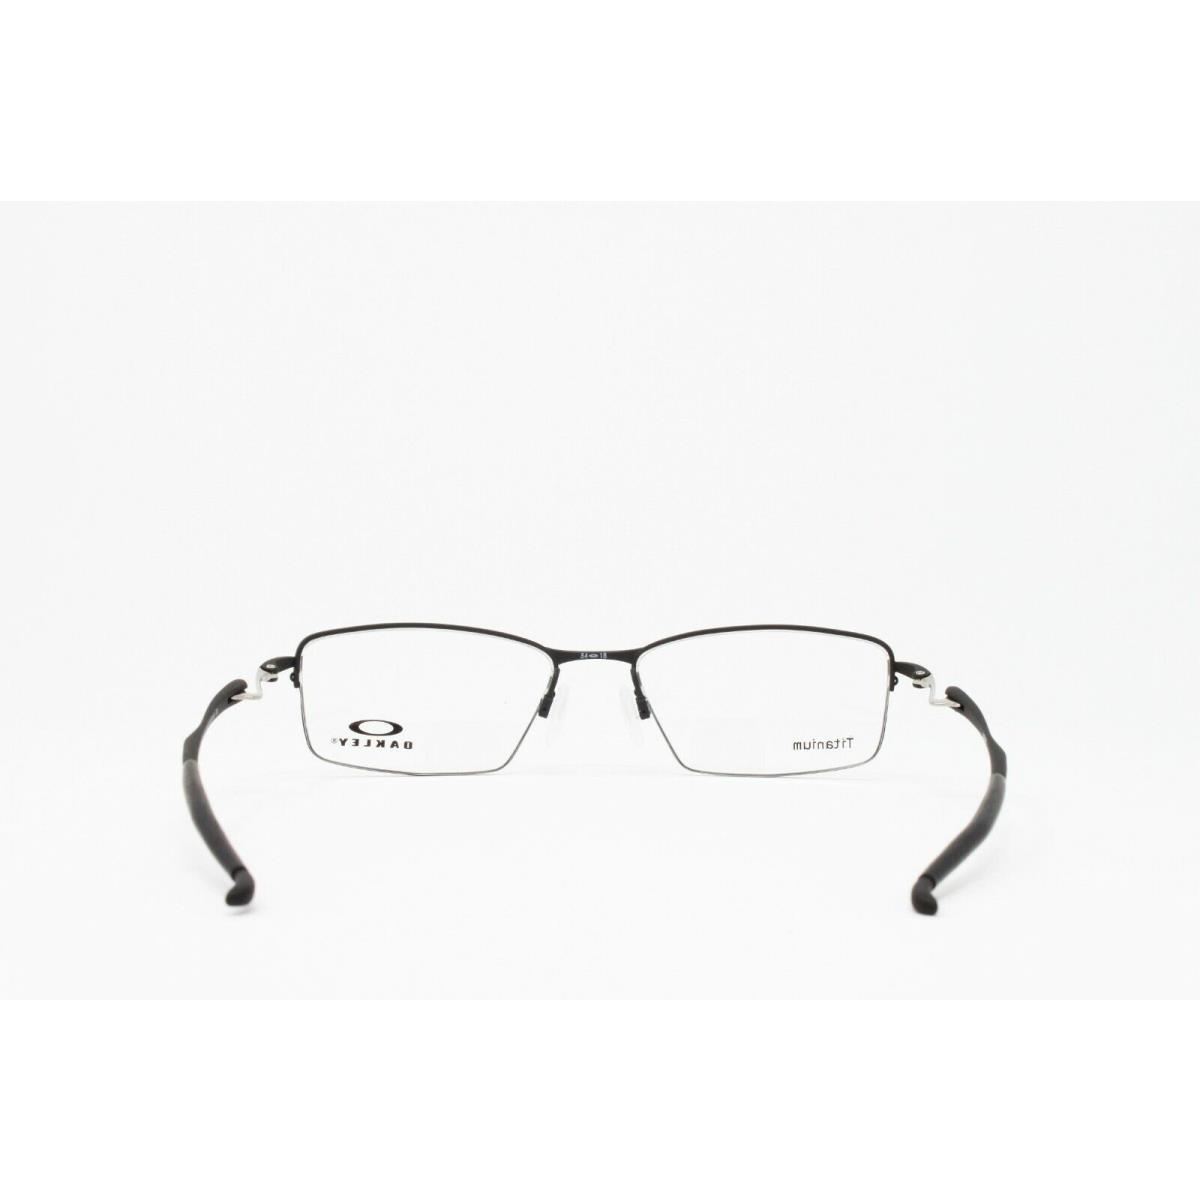 Oakley eyeglasses Optical Lizard - Black Frame